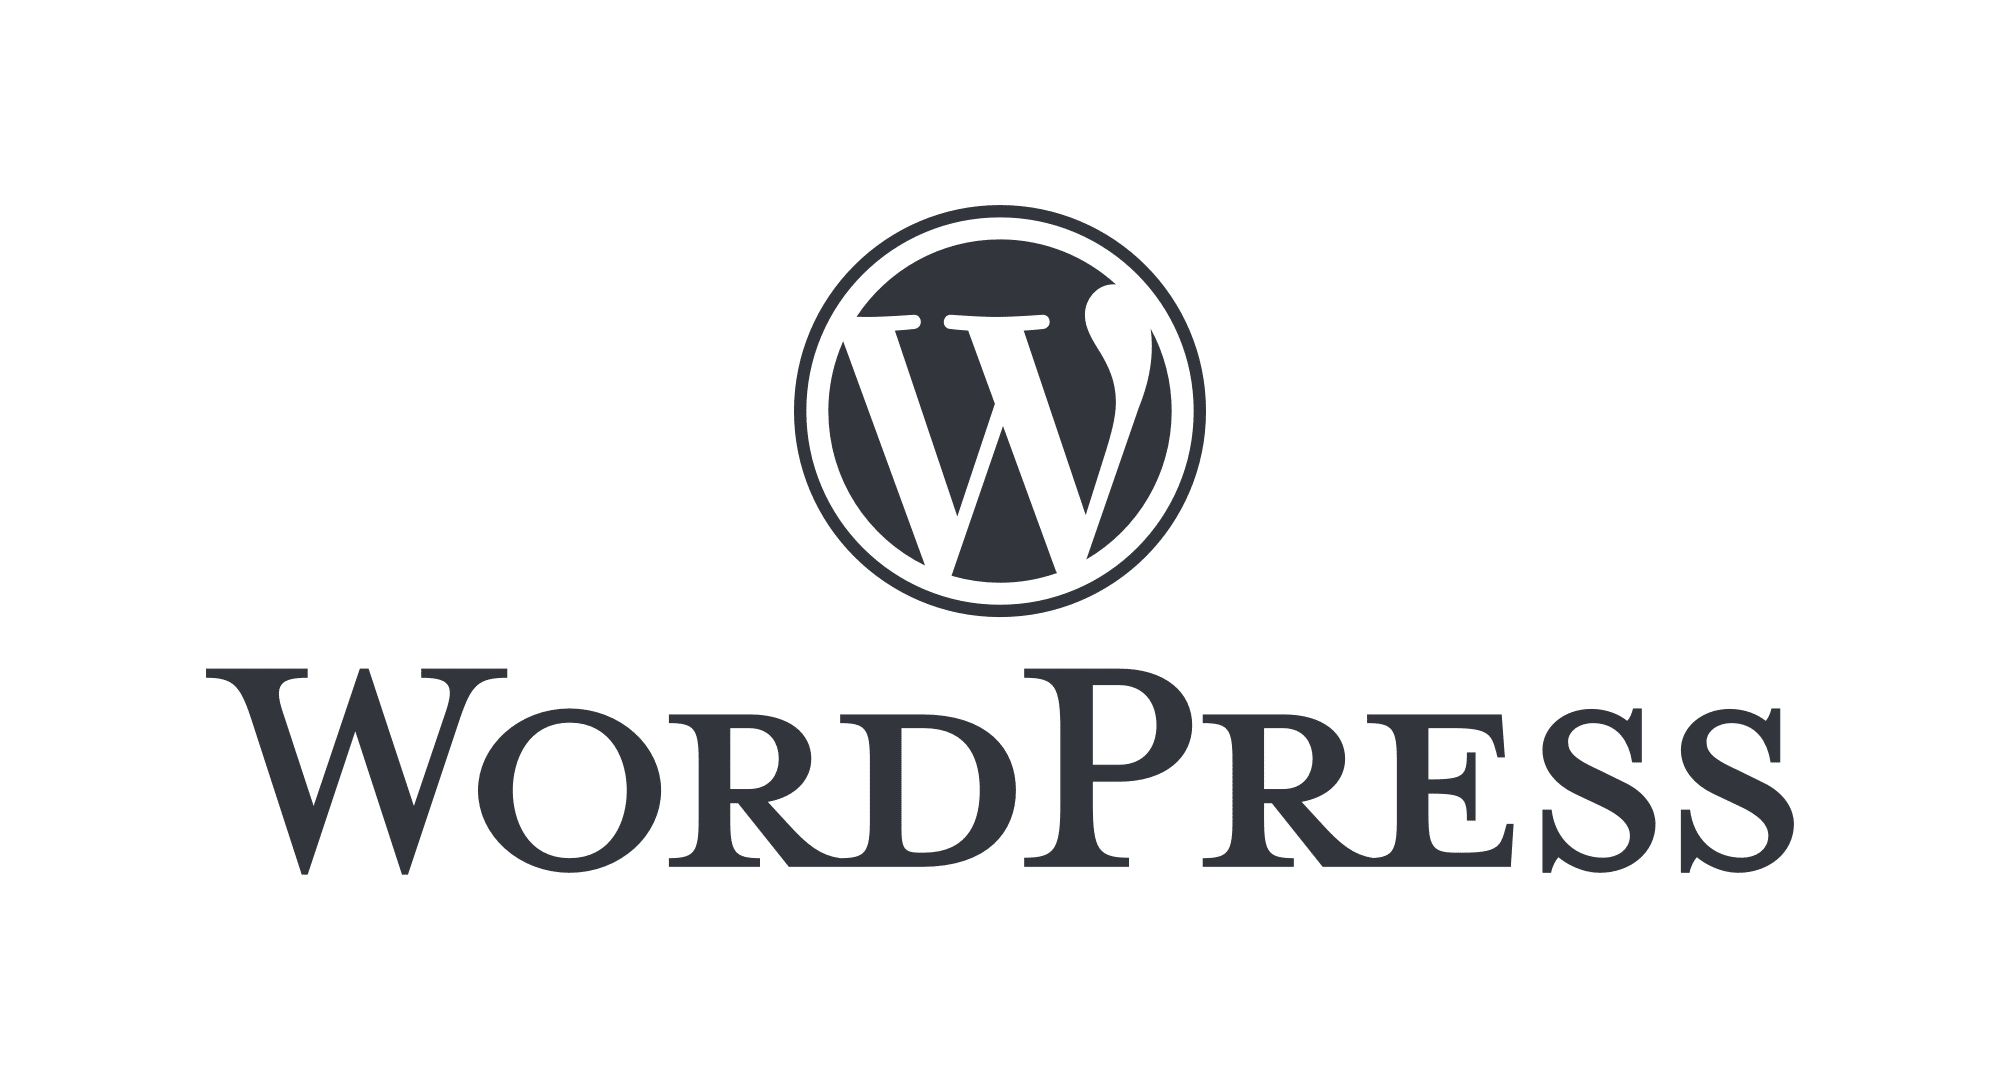 Wordpress ma już 40% rynku